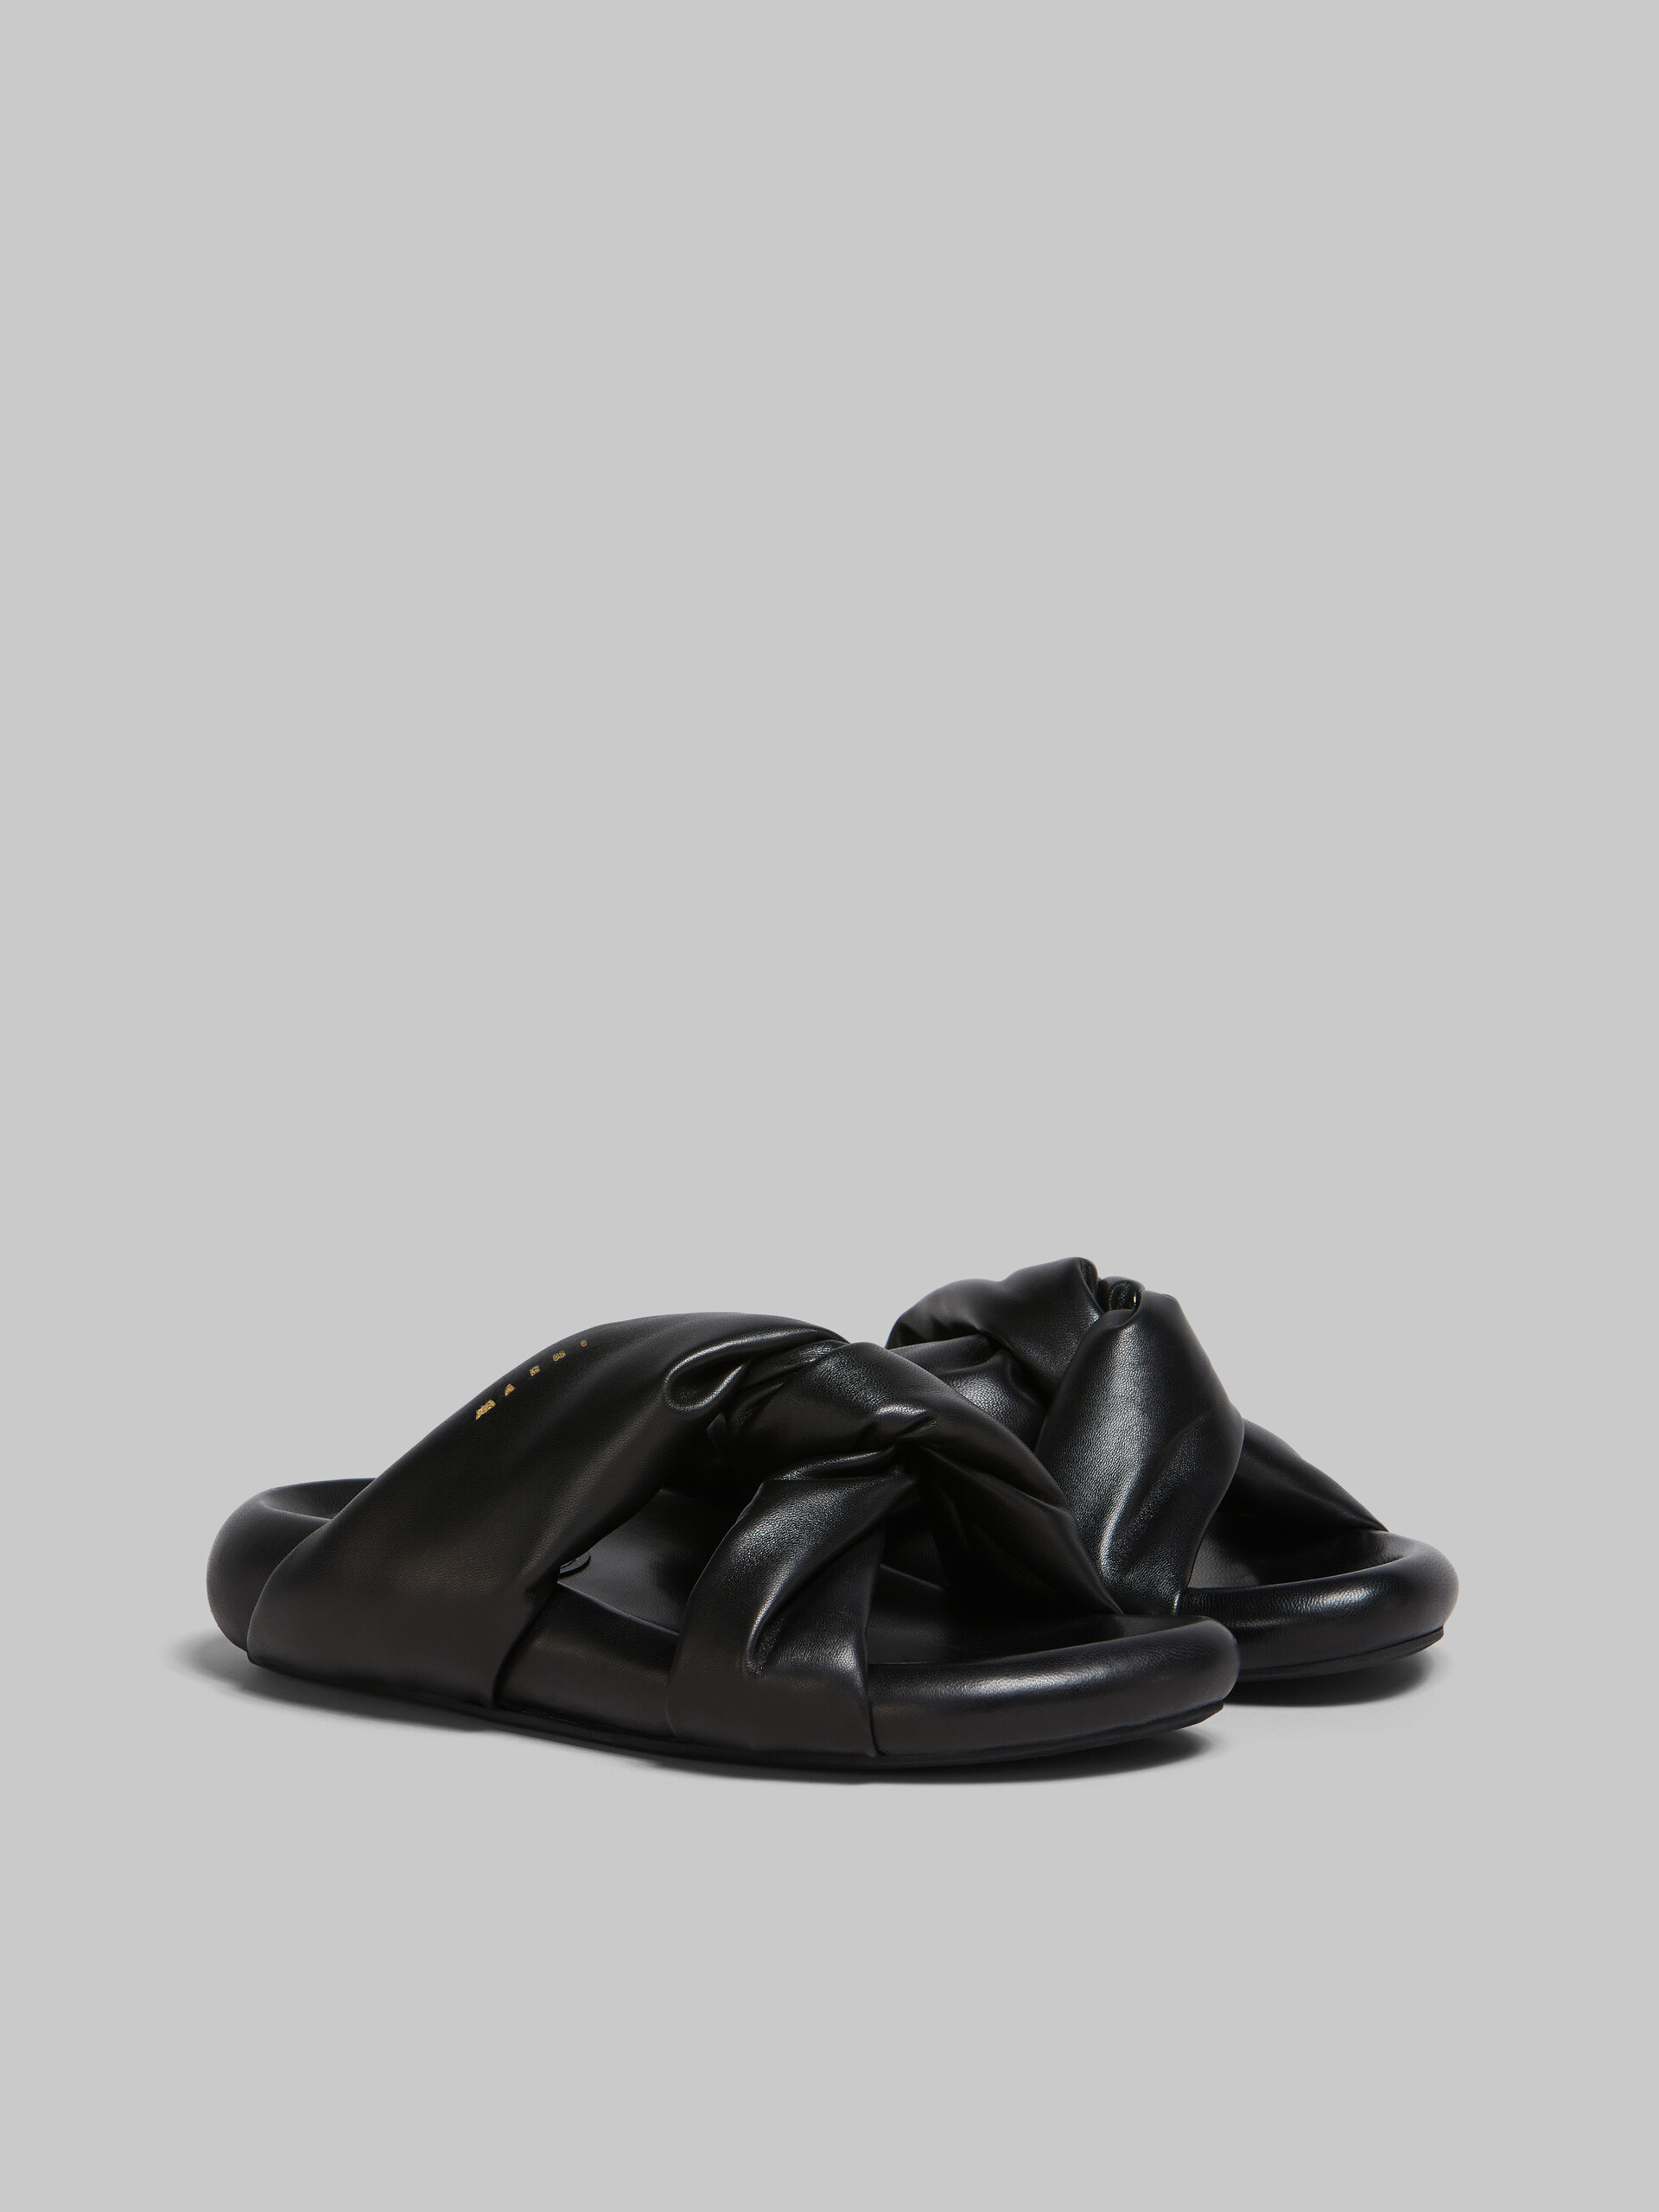 Black twisted leather Bubble sandal - Sandals - Image 2